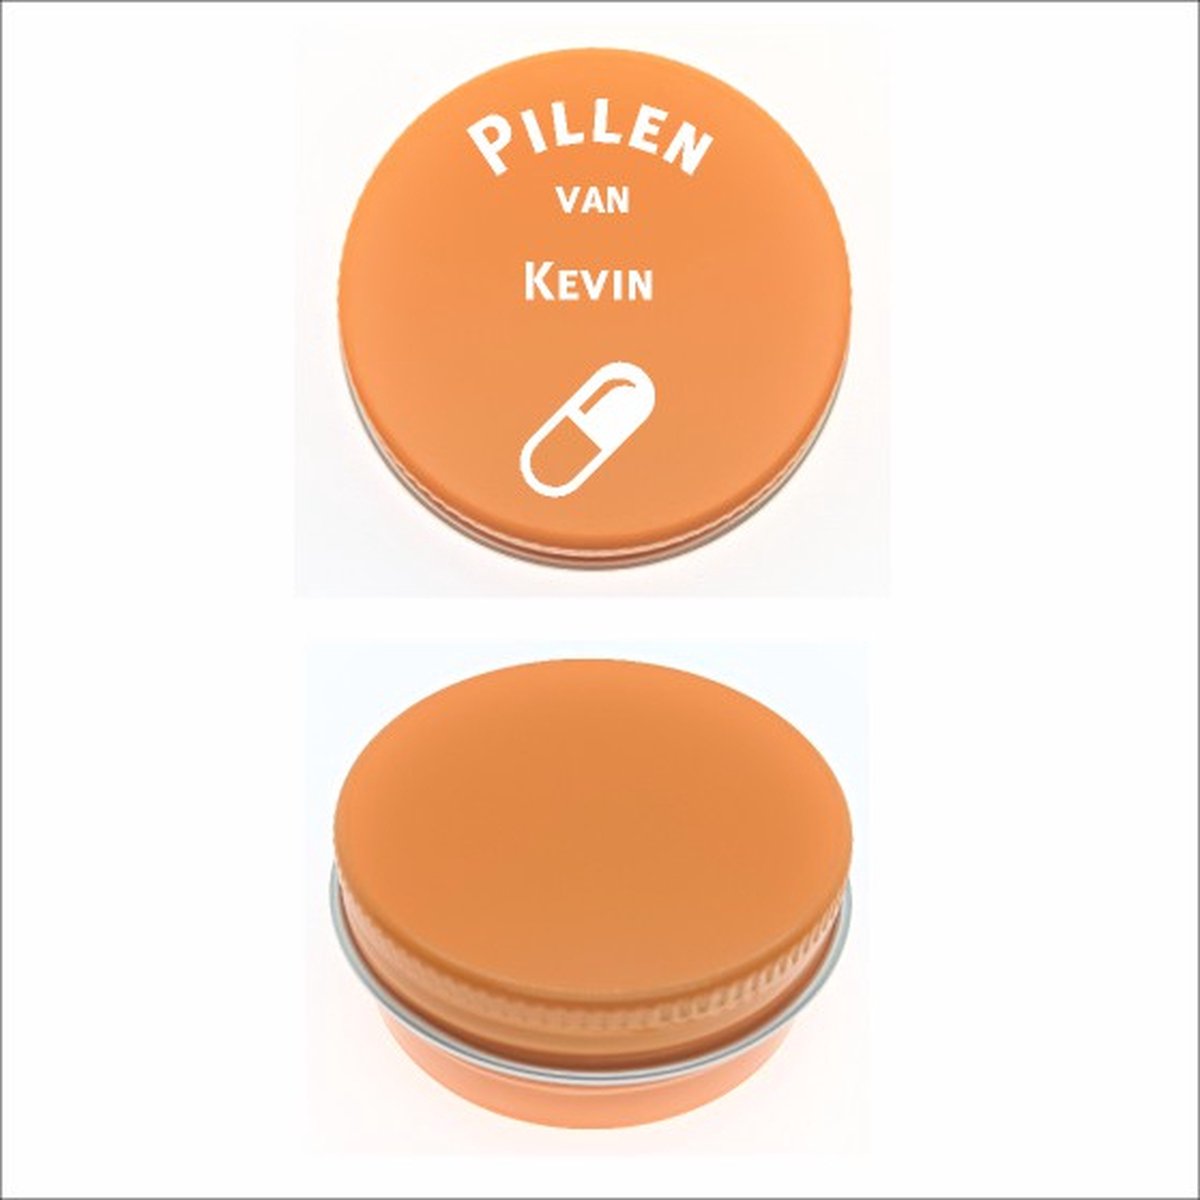 Pillen Blikje Met Naam Gravering - Kevin